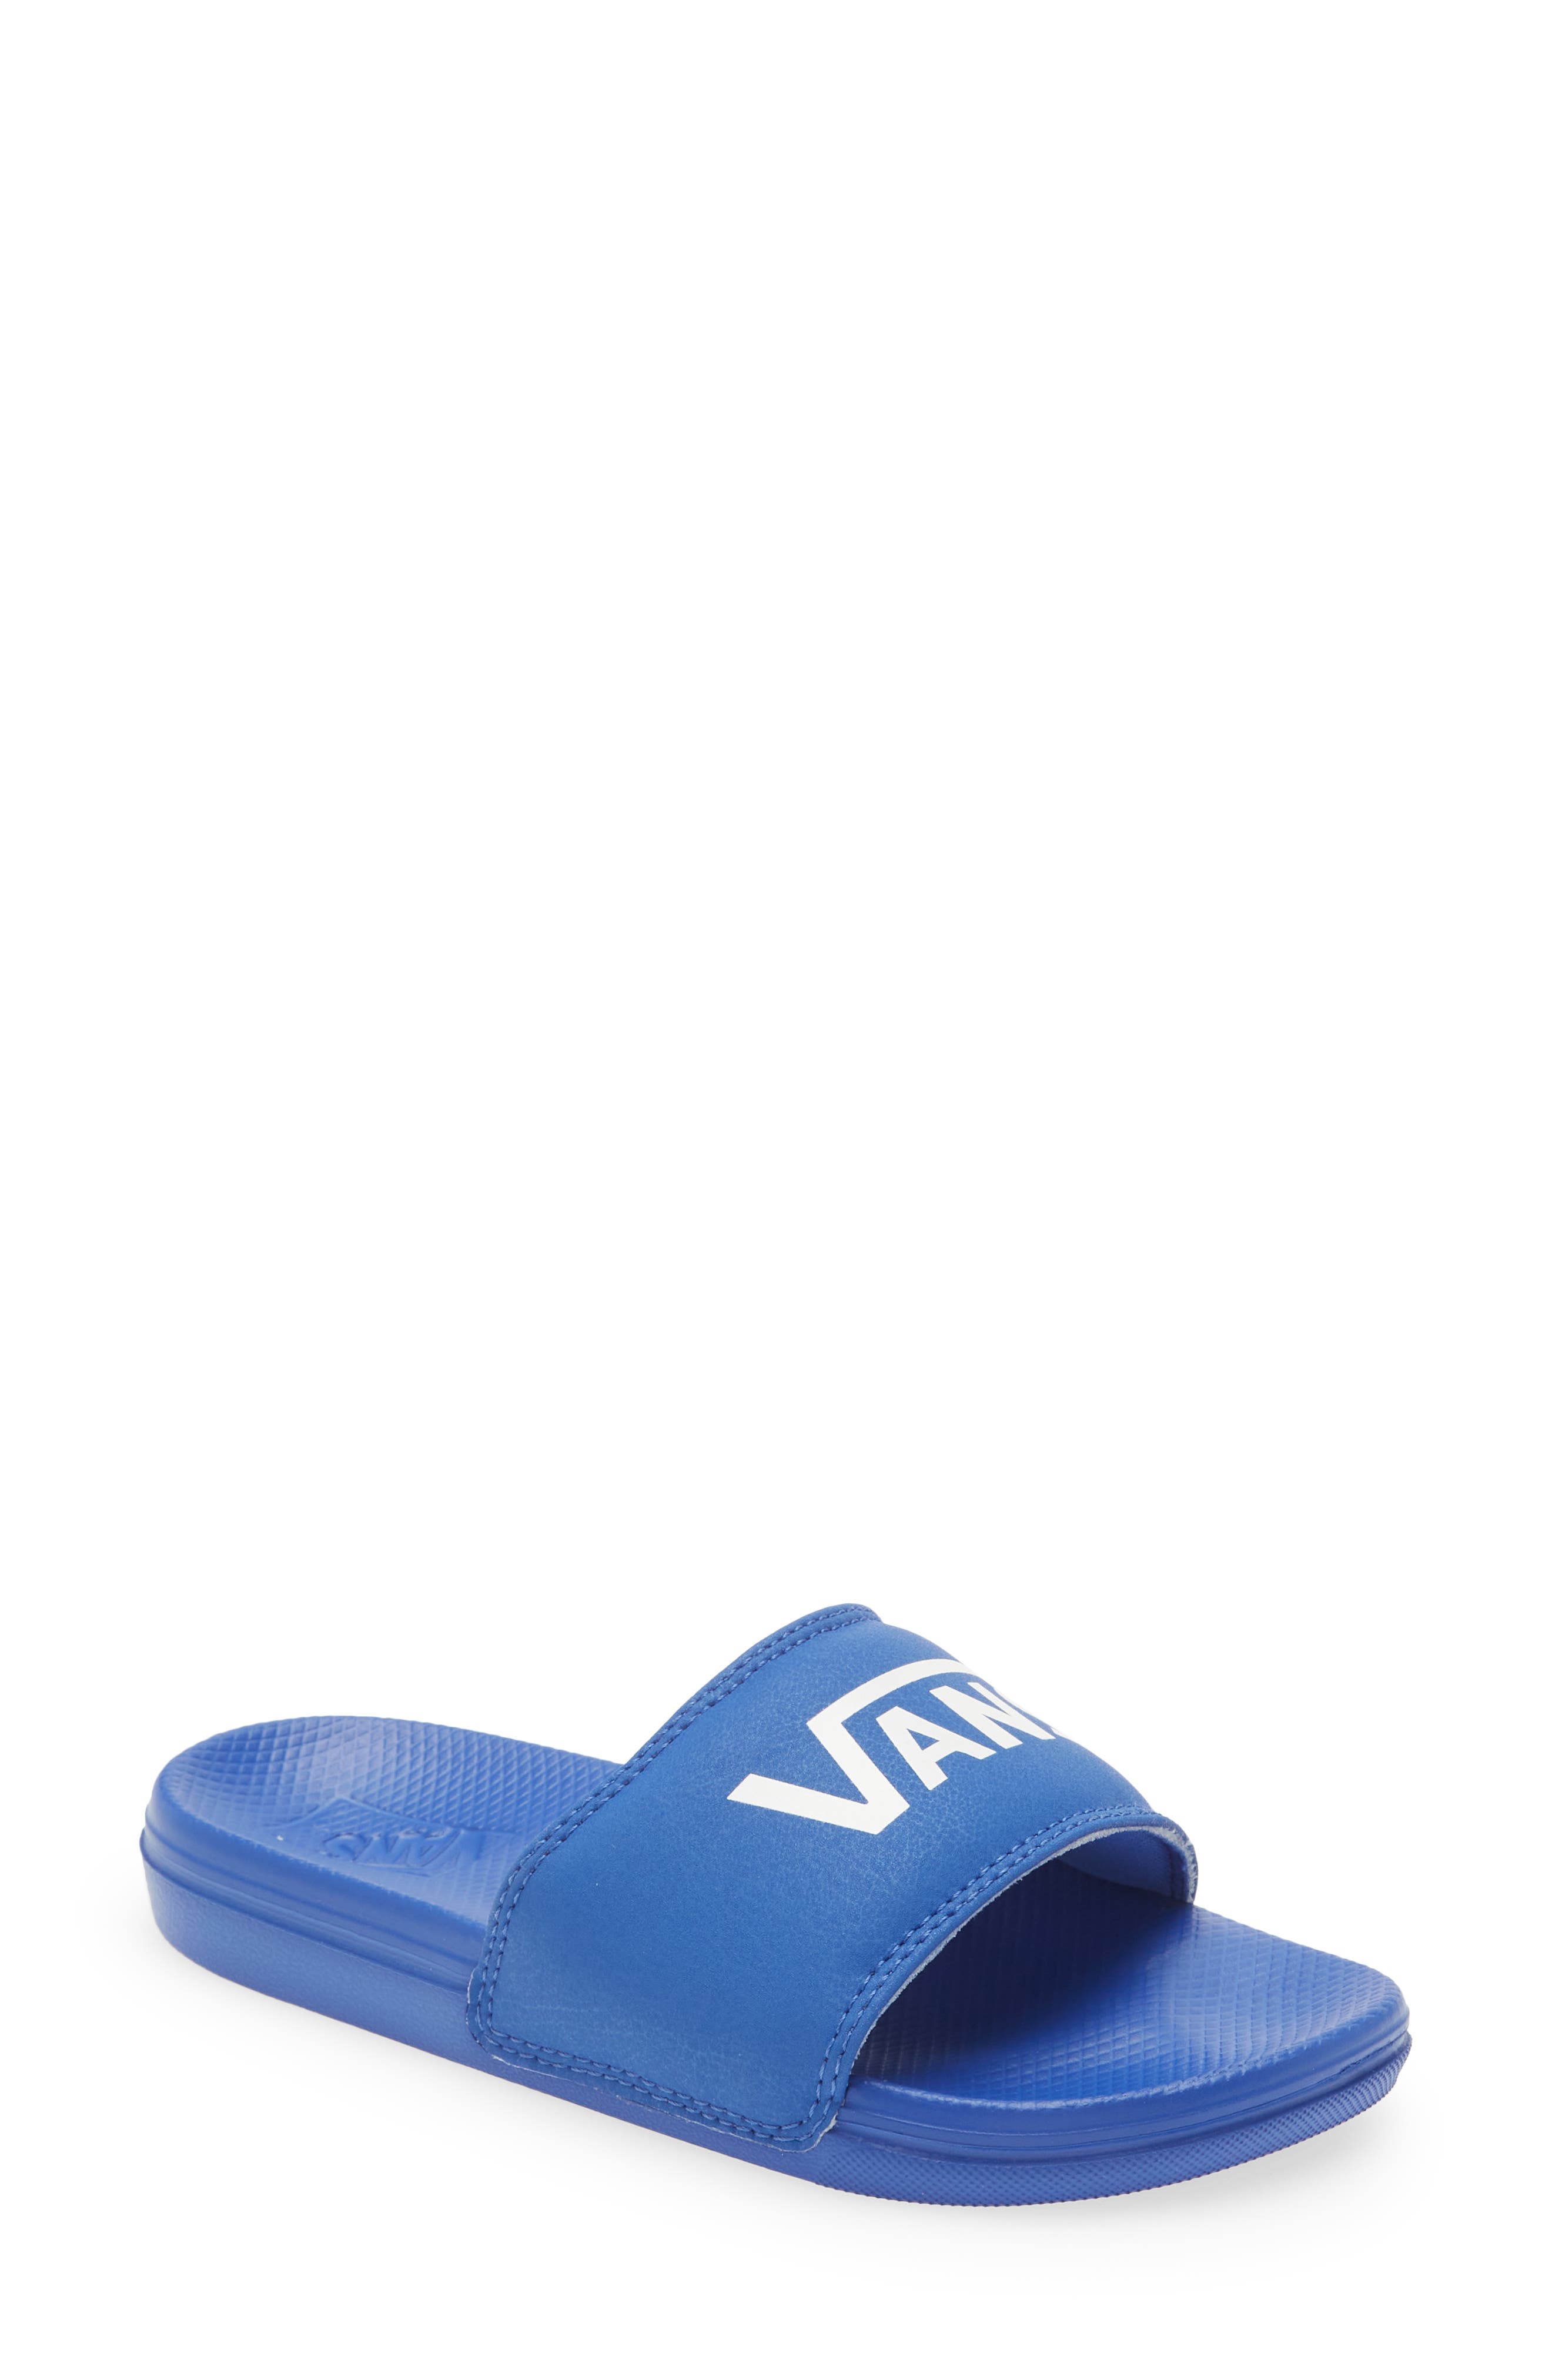 Vans La Costa Slide Sandal in Reflective Dazzling Blue/Tru